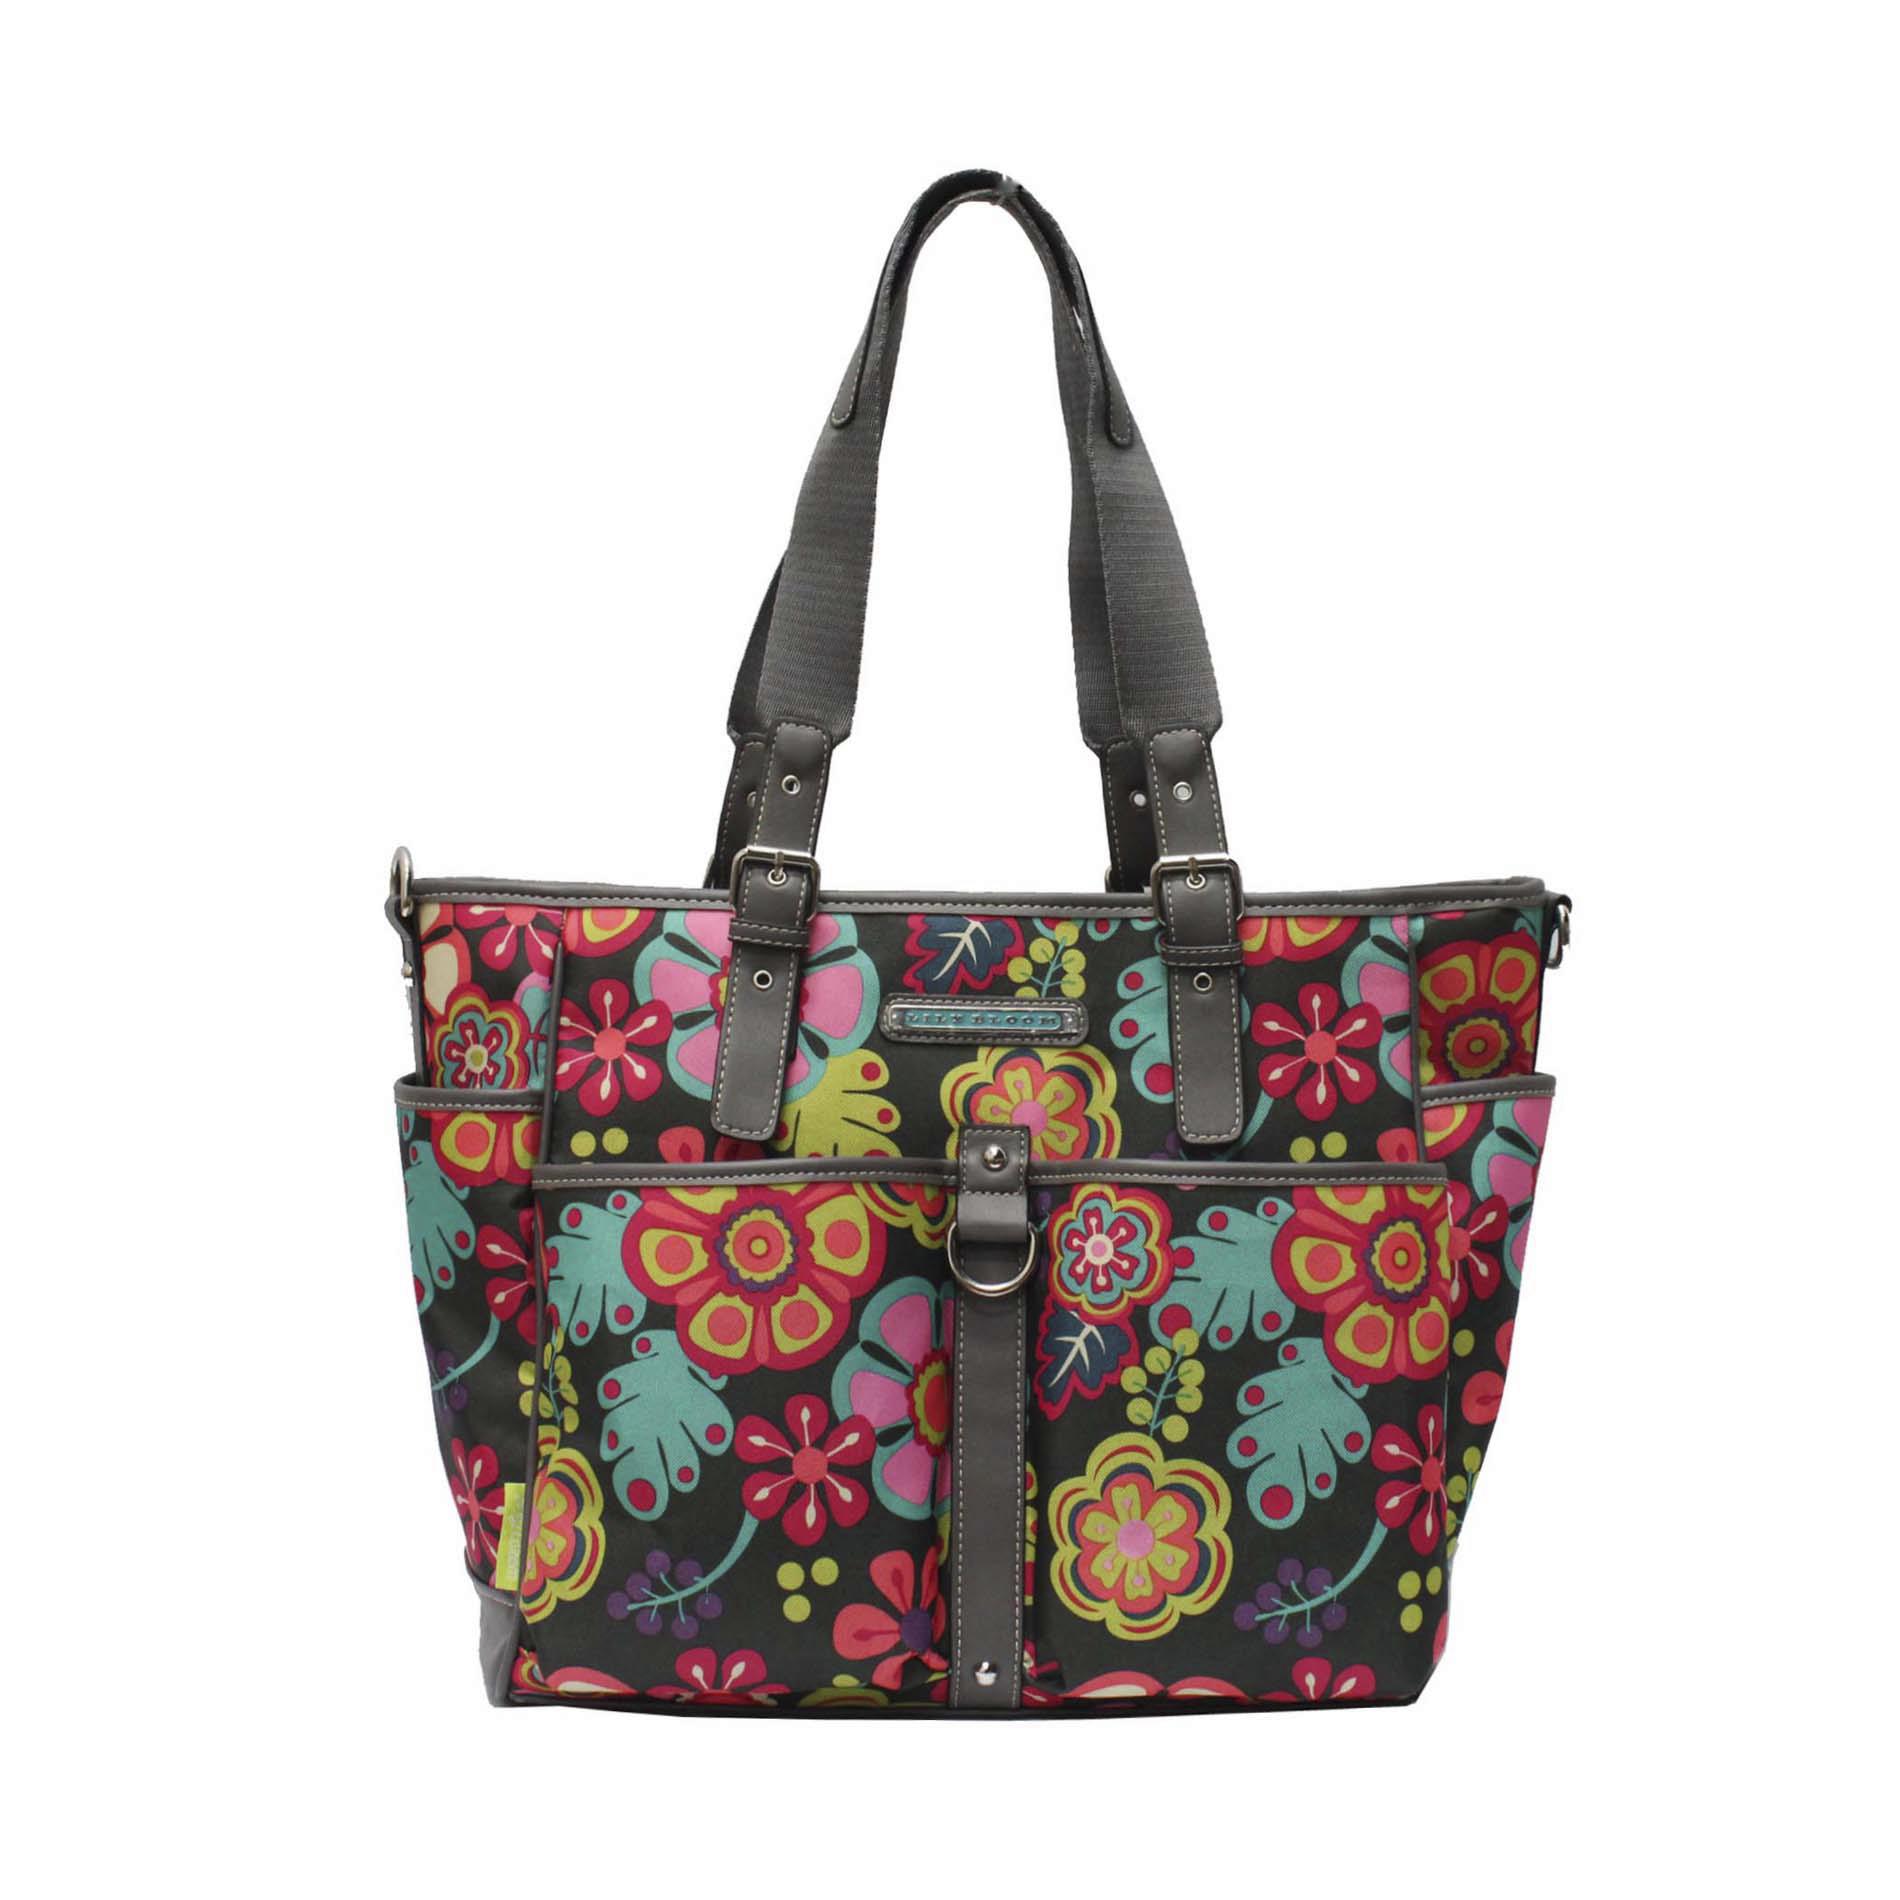 Lily Bloom Women's Laptop Tote Bag - Floral Print